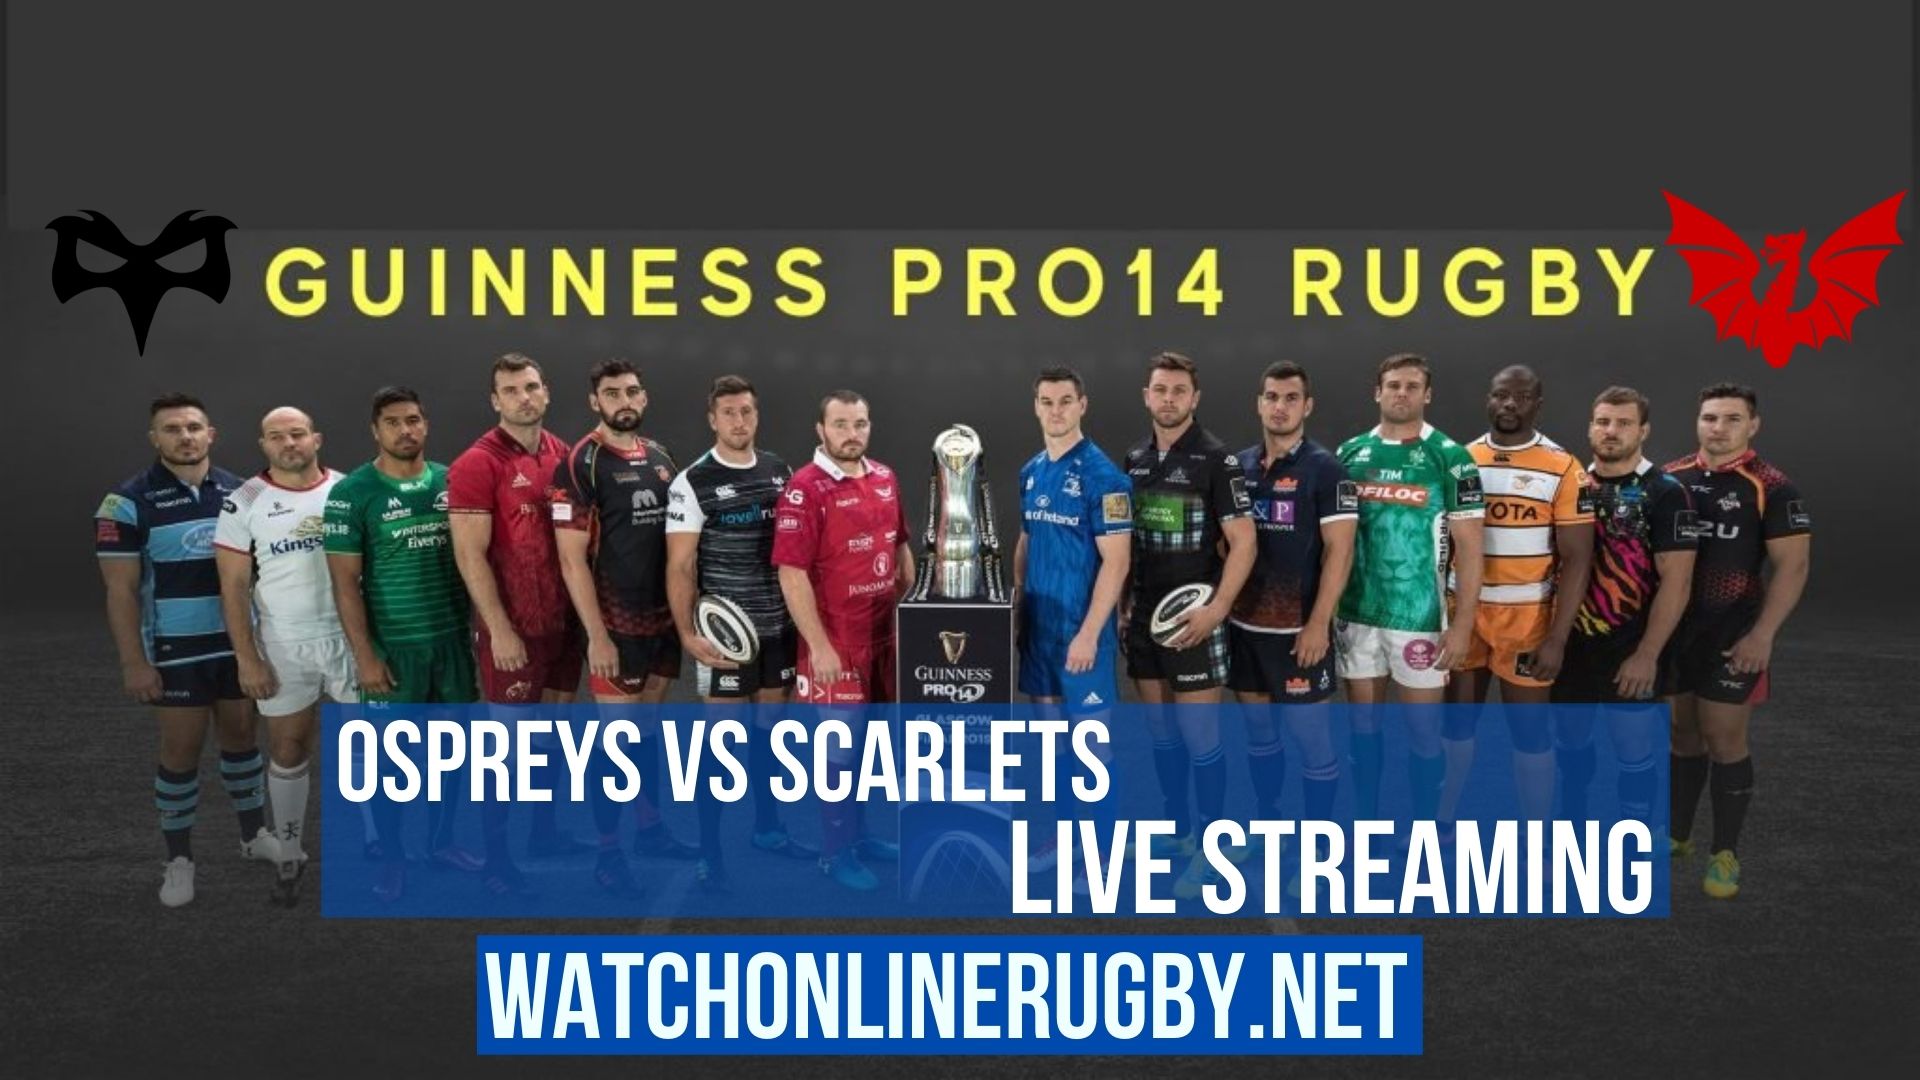 Ospreys vs Scarlets Rugby Live